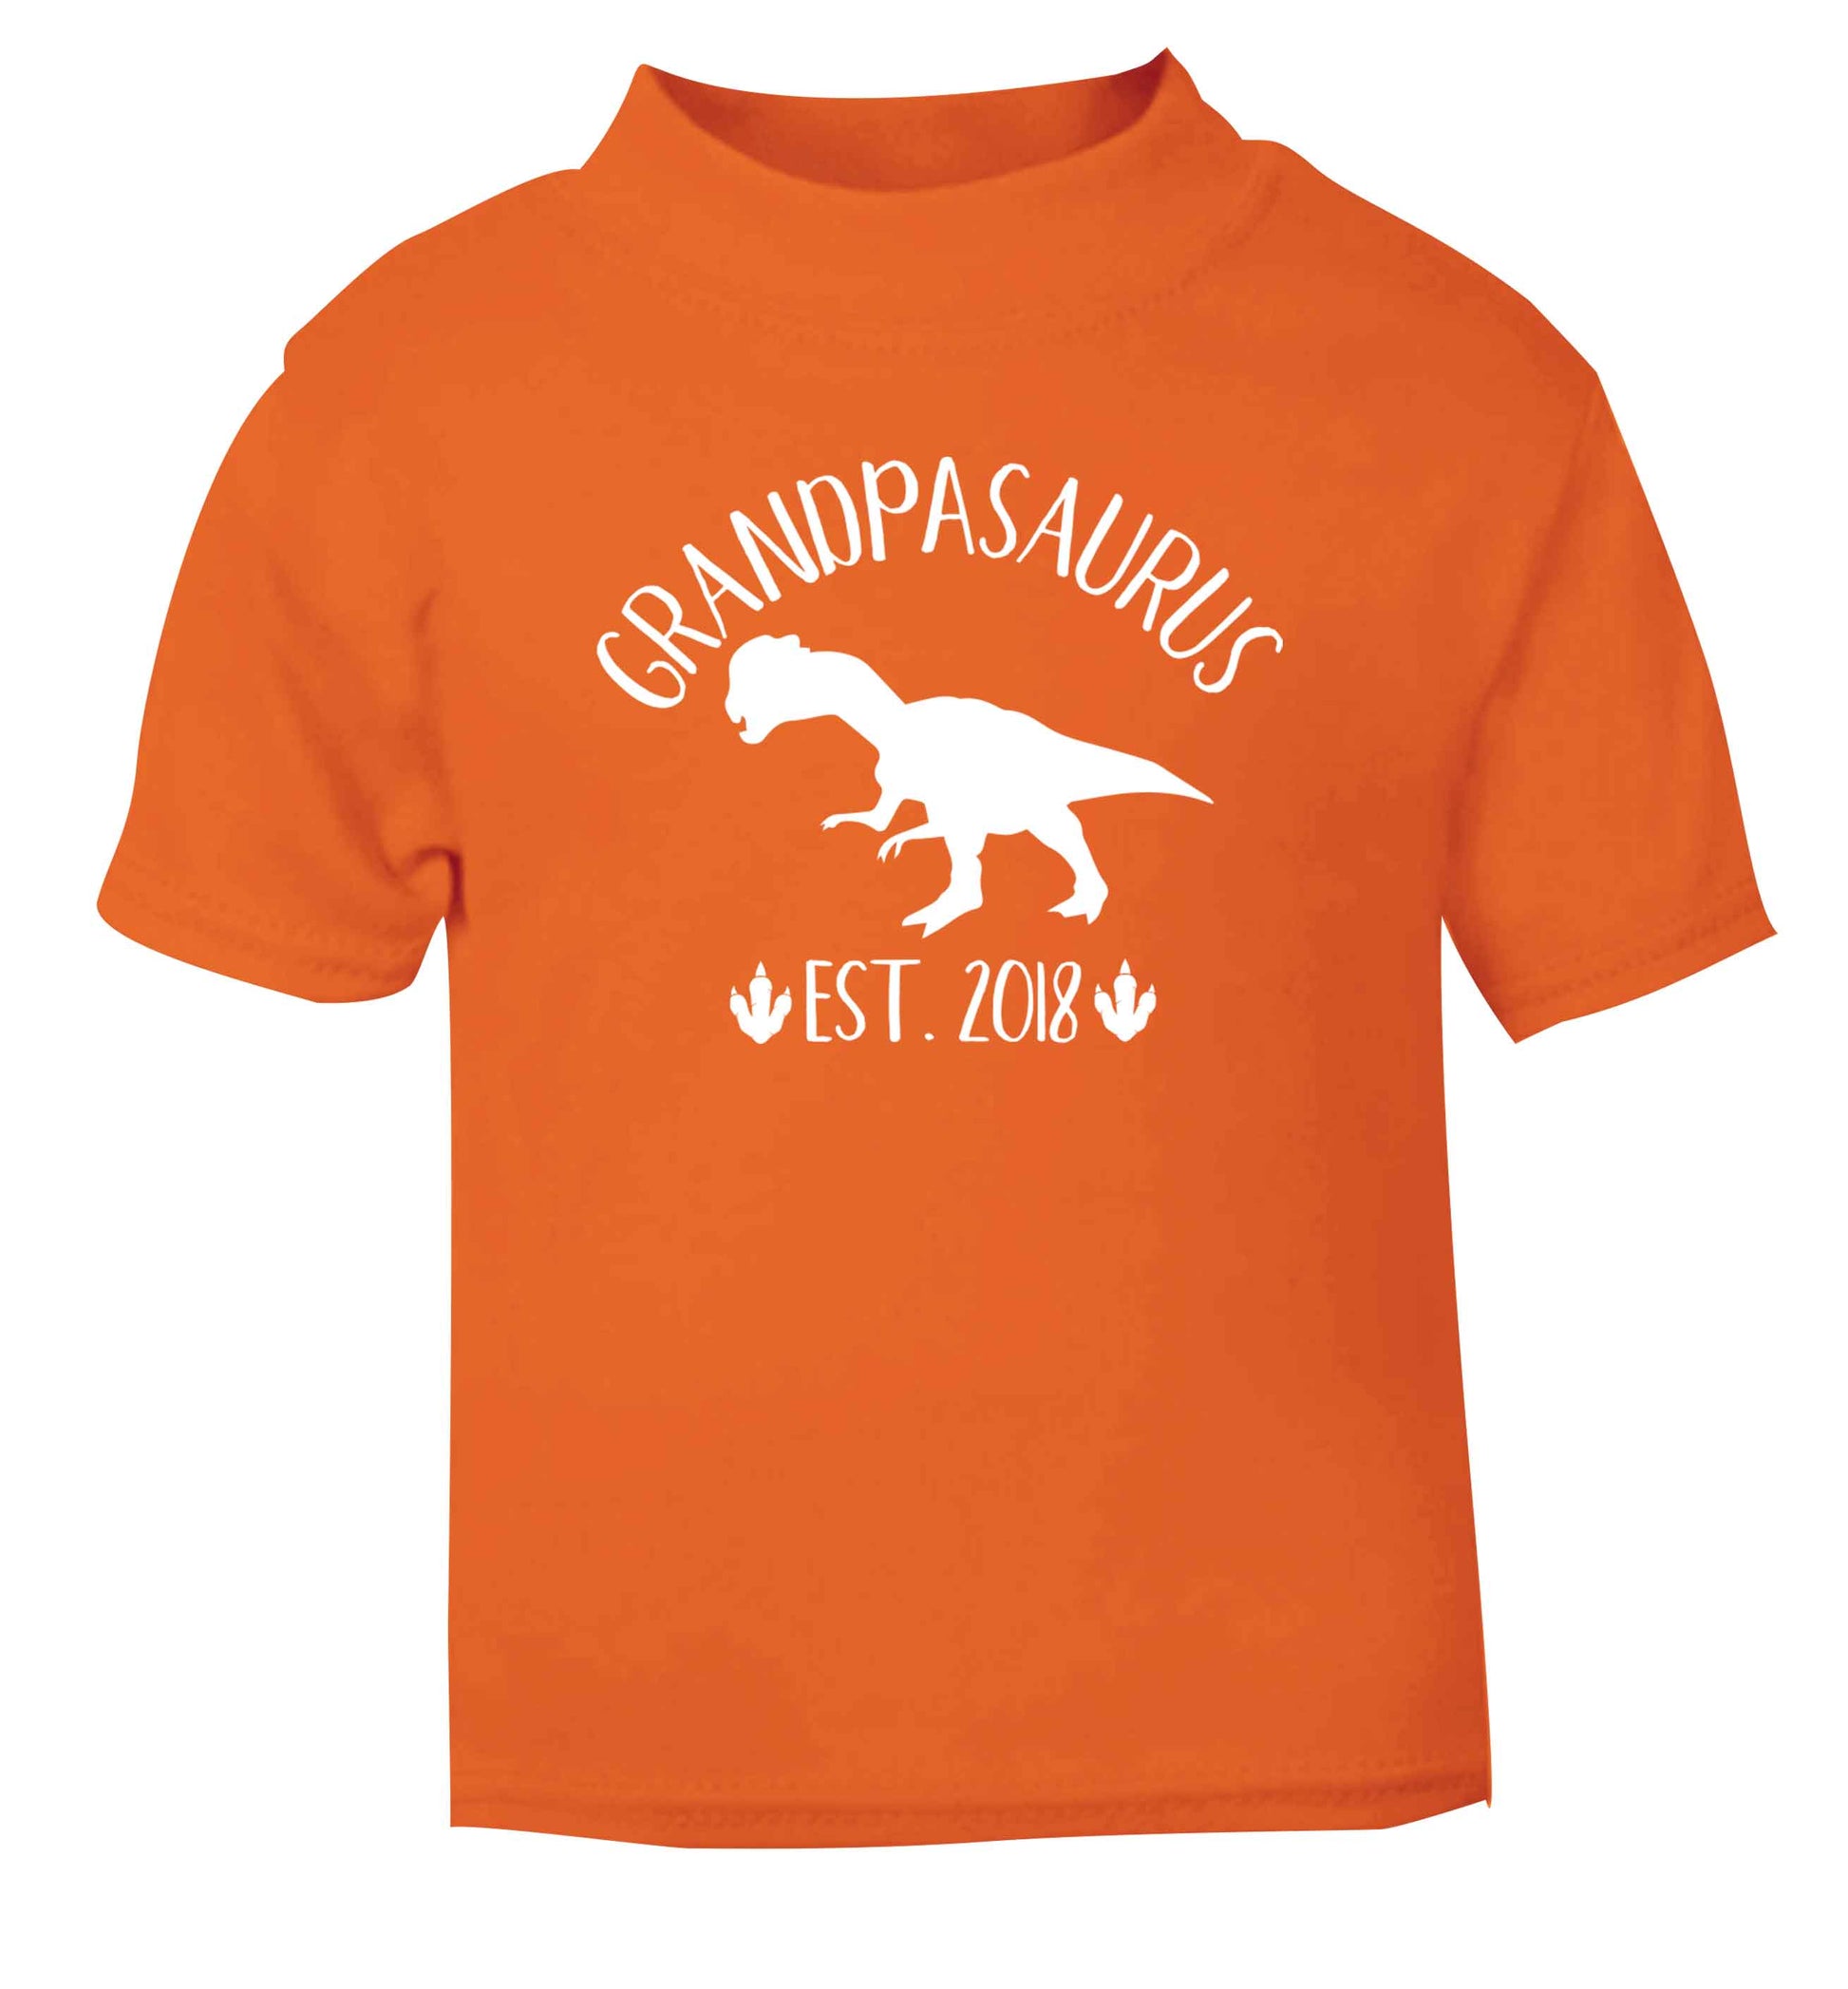 Personalised grandpasaurus since (custom date) orange Baby Toddler Tshirt 2 Years